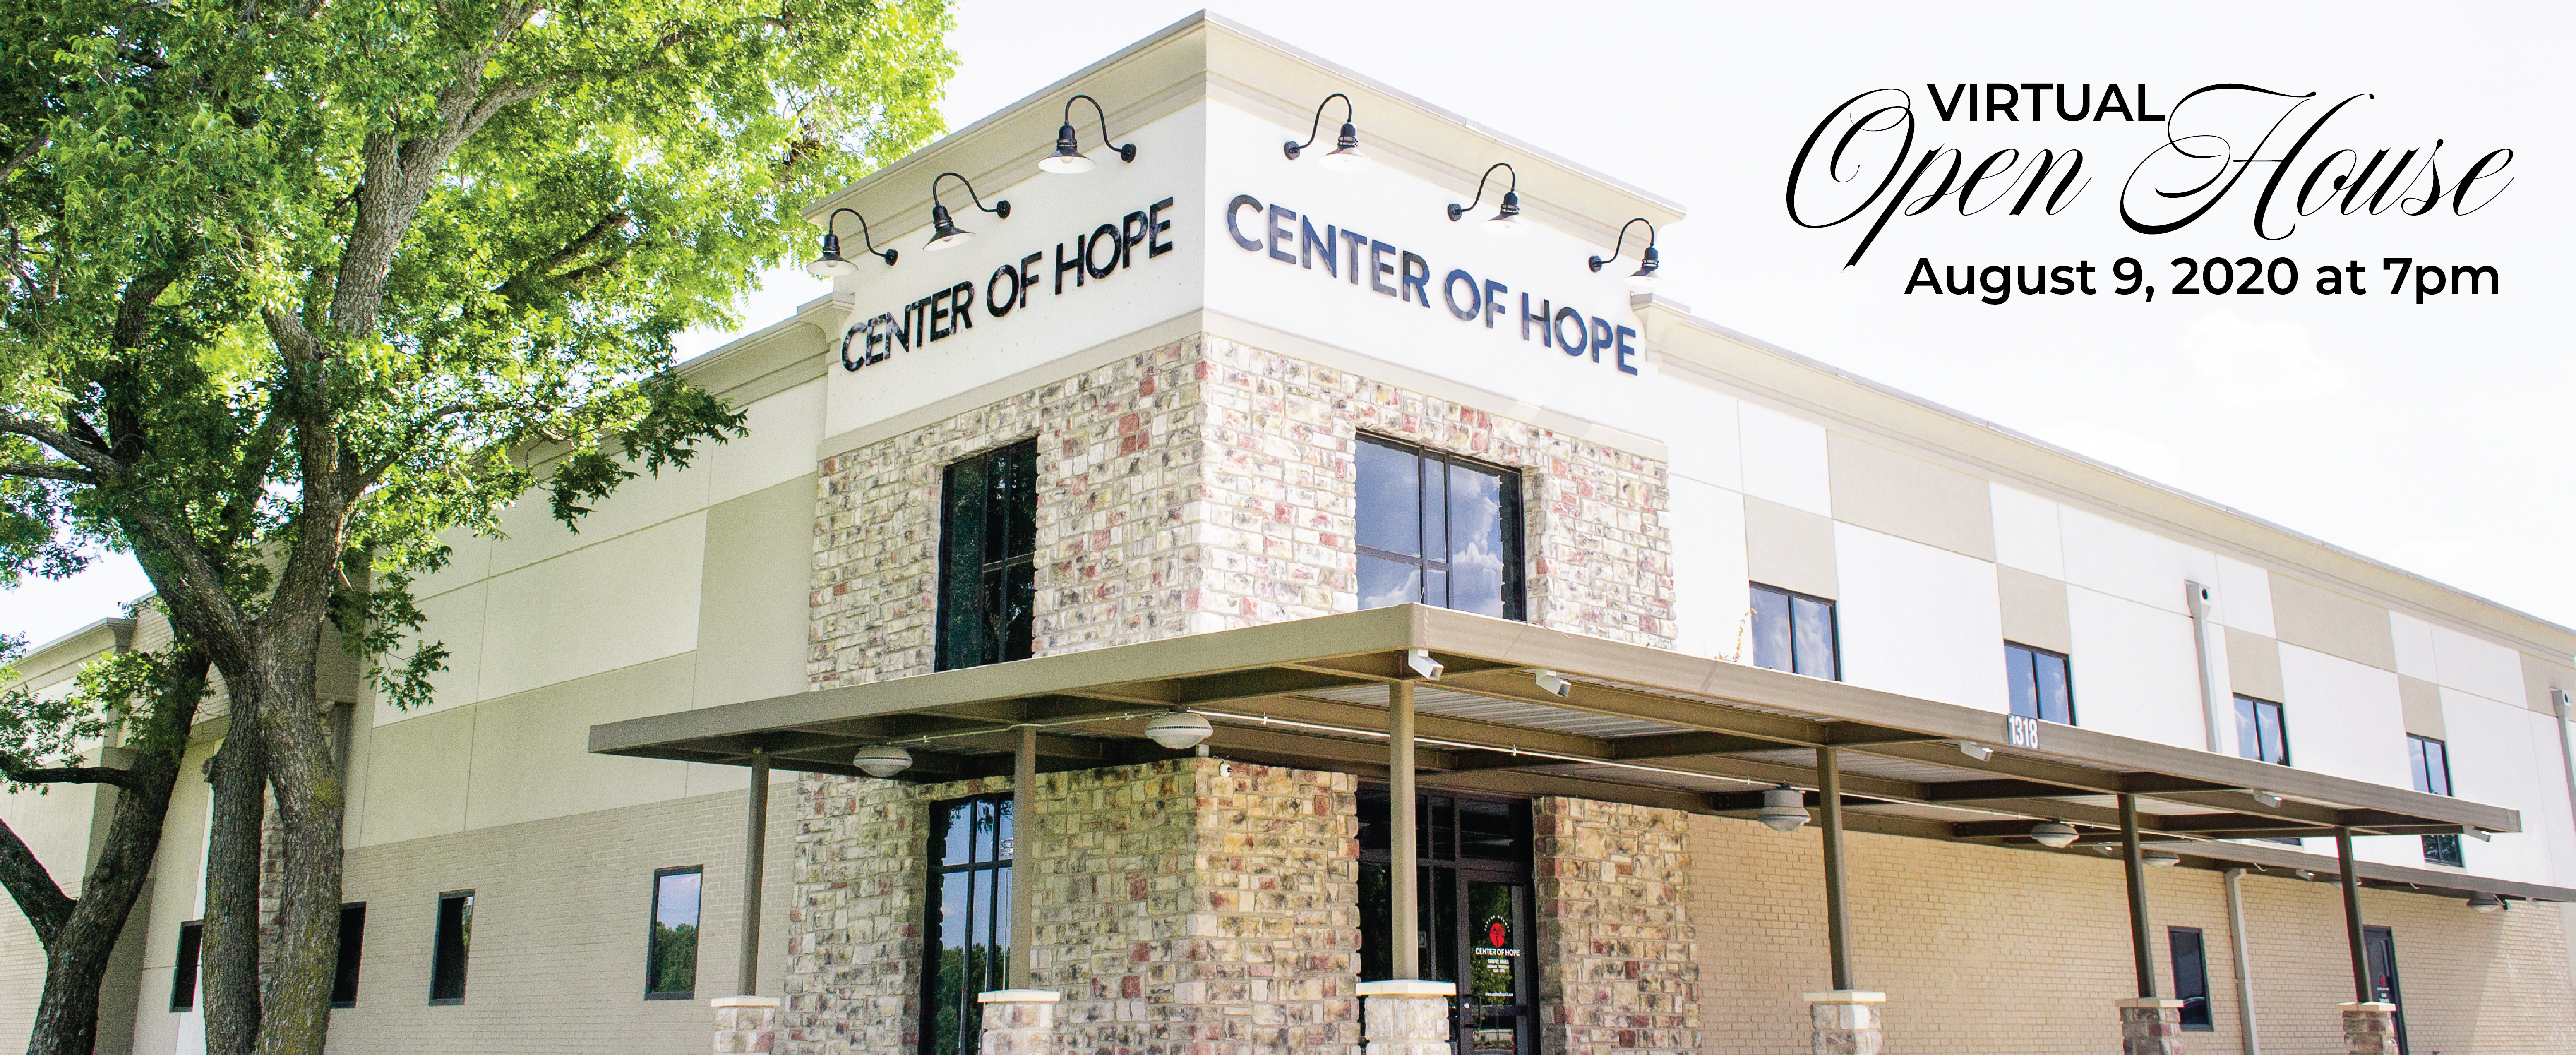 Center of Hope Virtual Open House